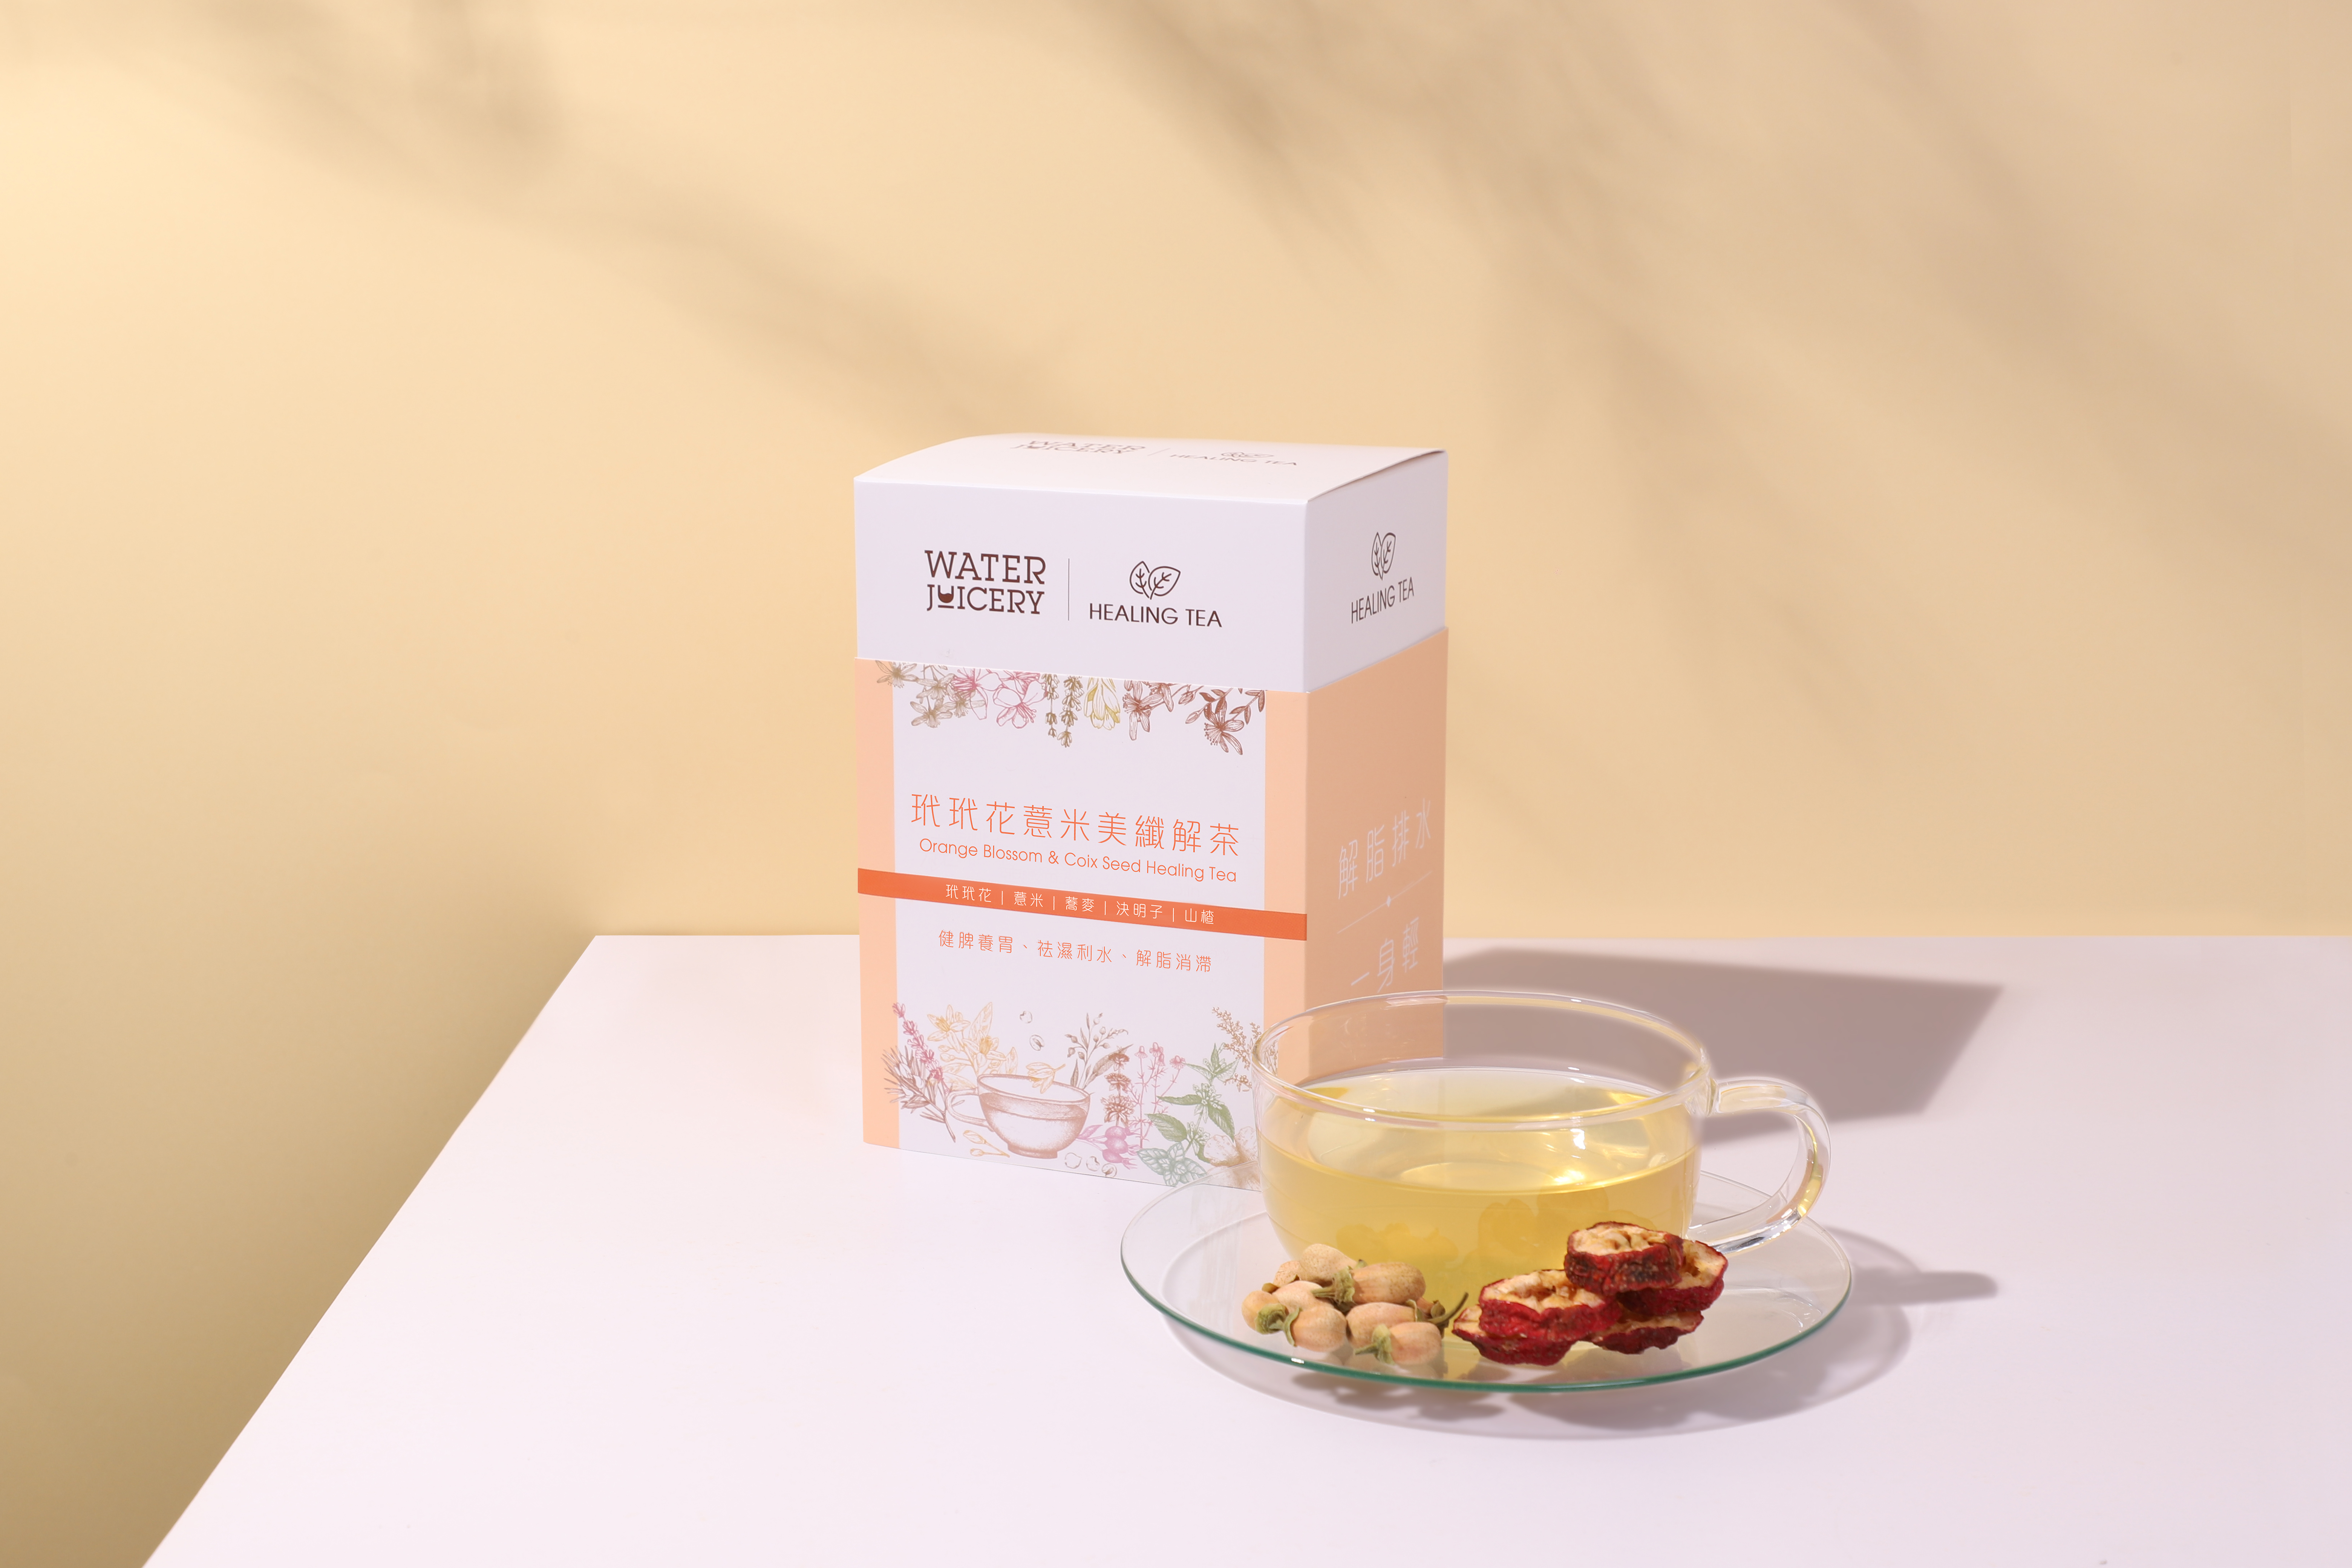 Orange Blossom & Coix Seed Healing Tea (1).jpg